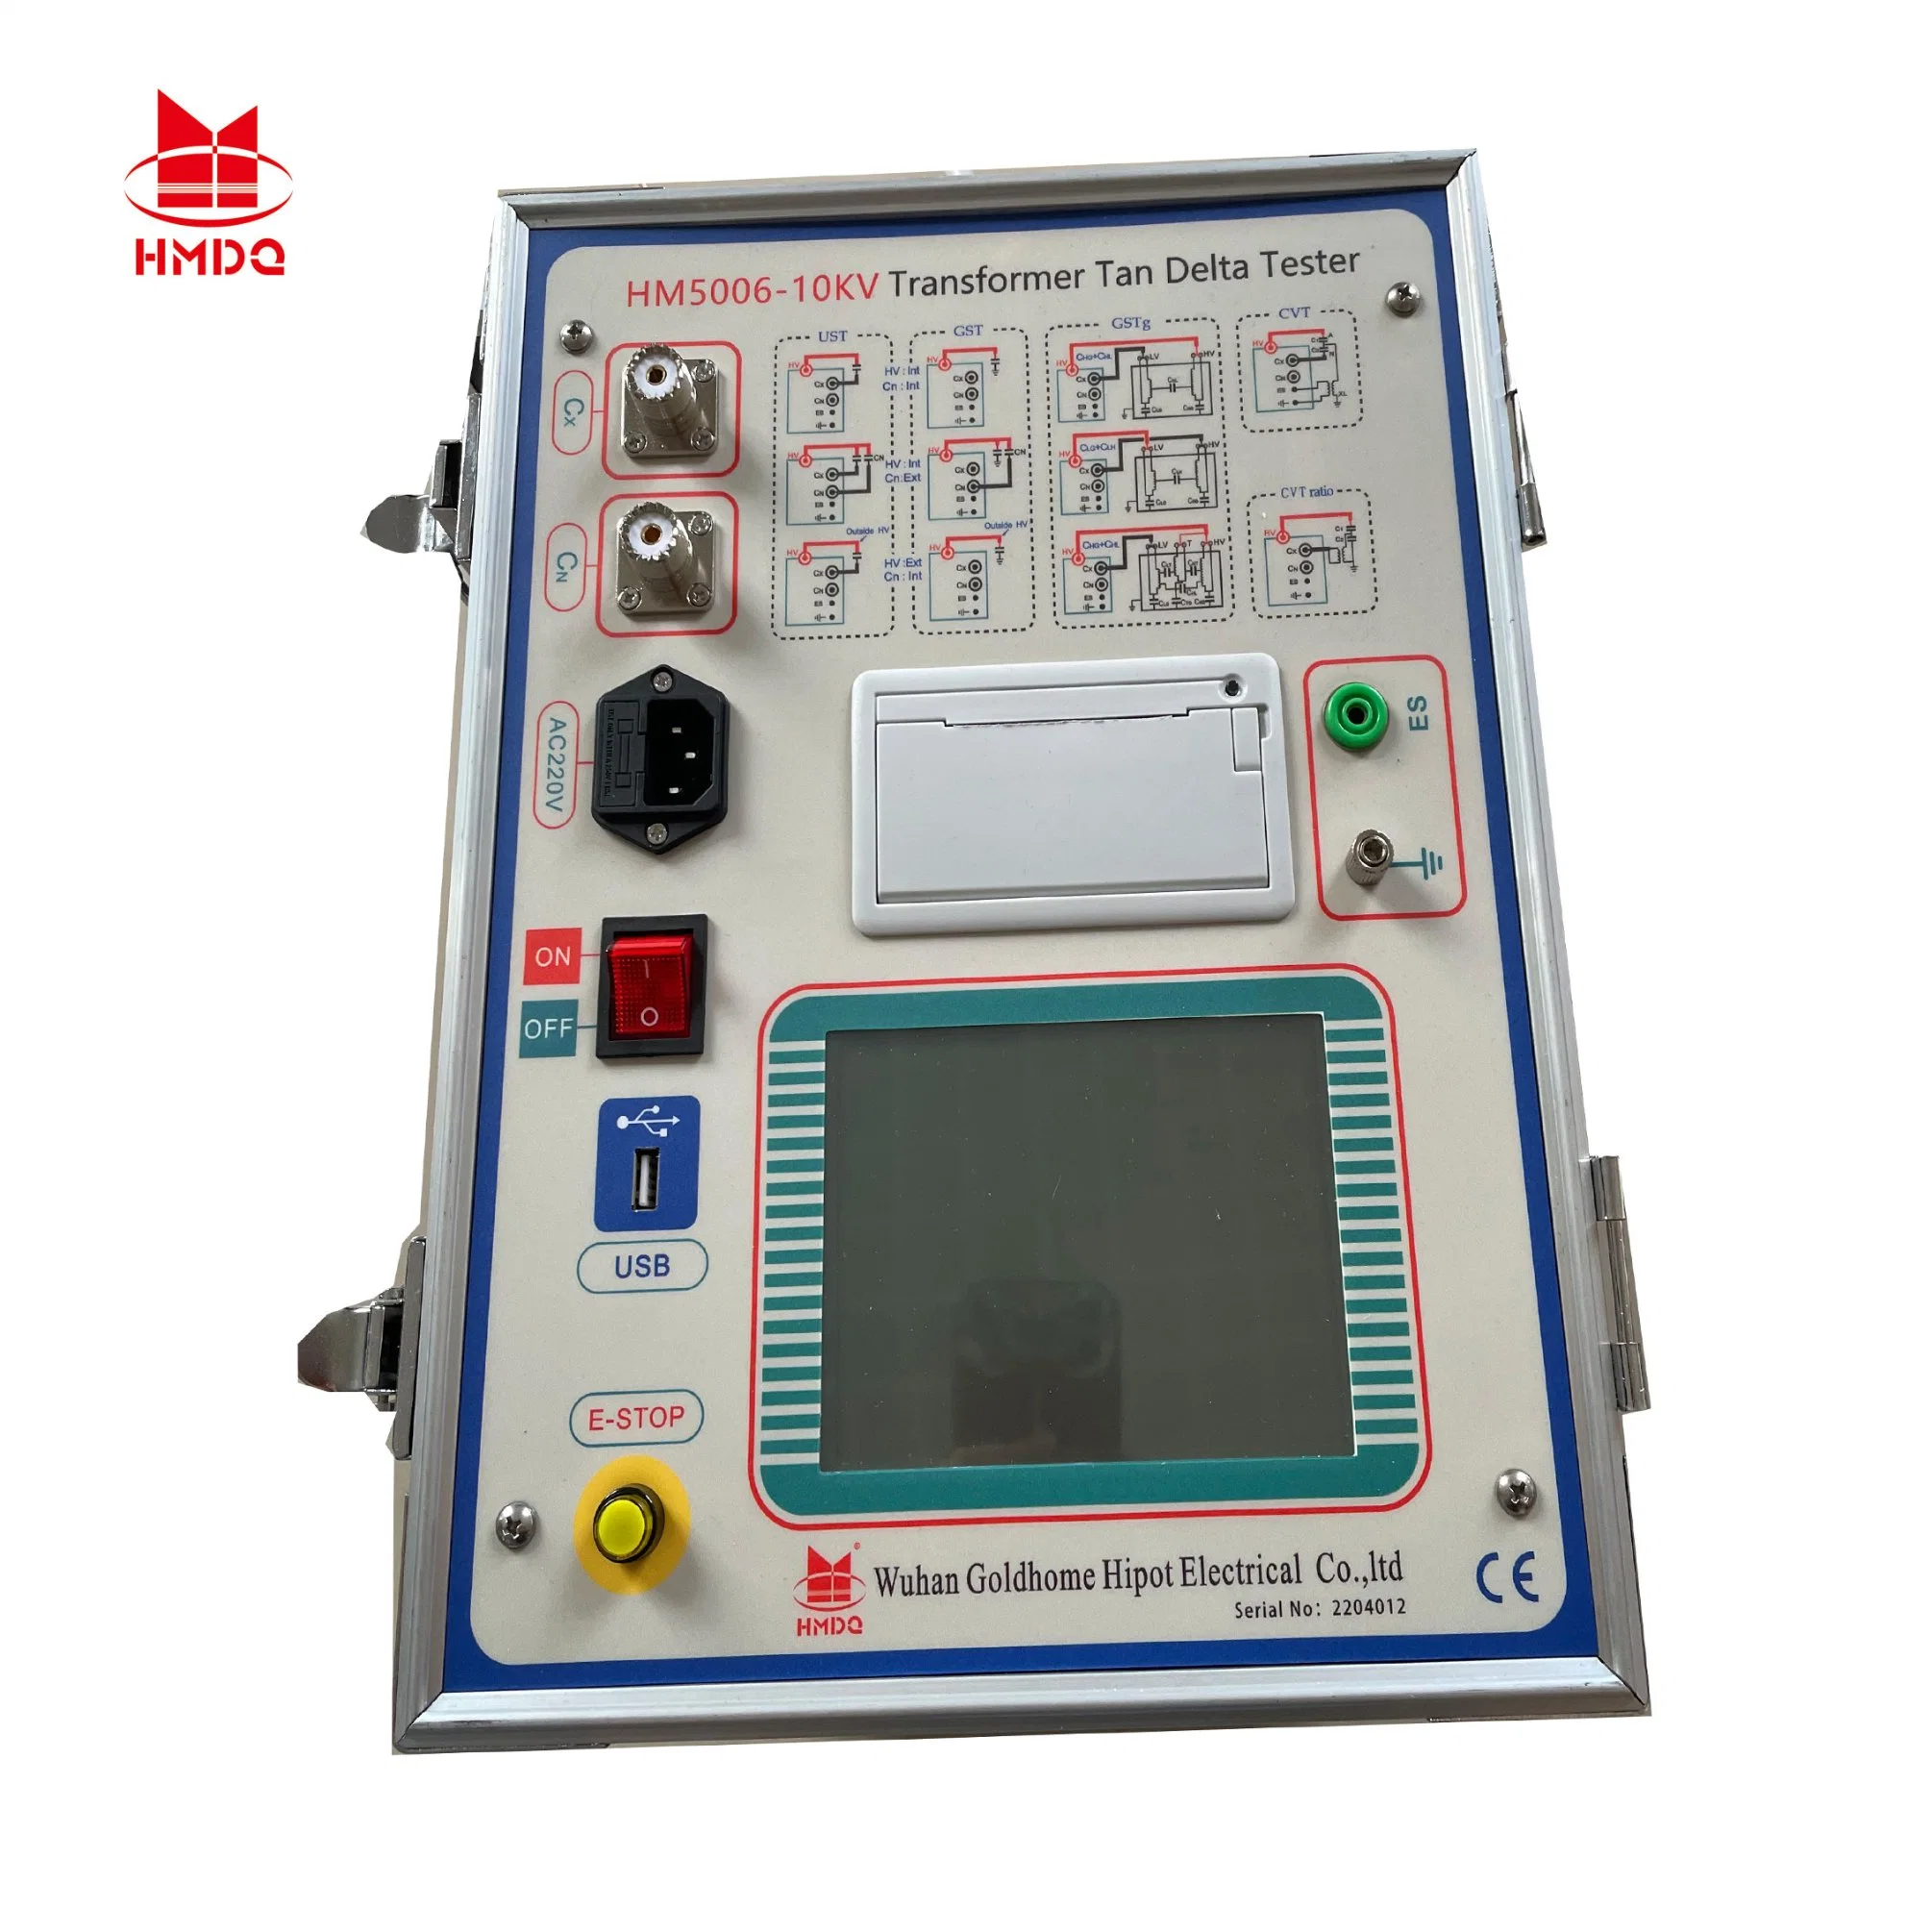 medidor de factor de dissipação de capacidade do transformador do dispositivo de teste Delta Tan de 10 kv Preço do equipamento de teste de perda